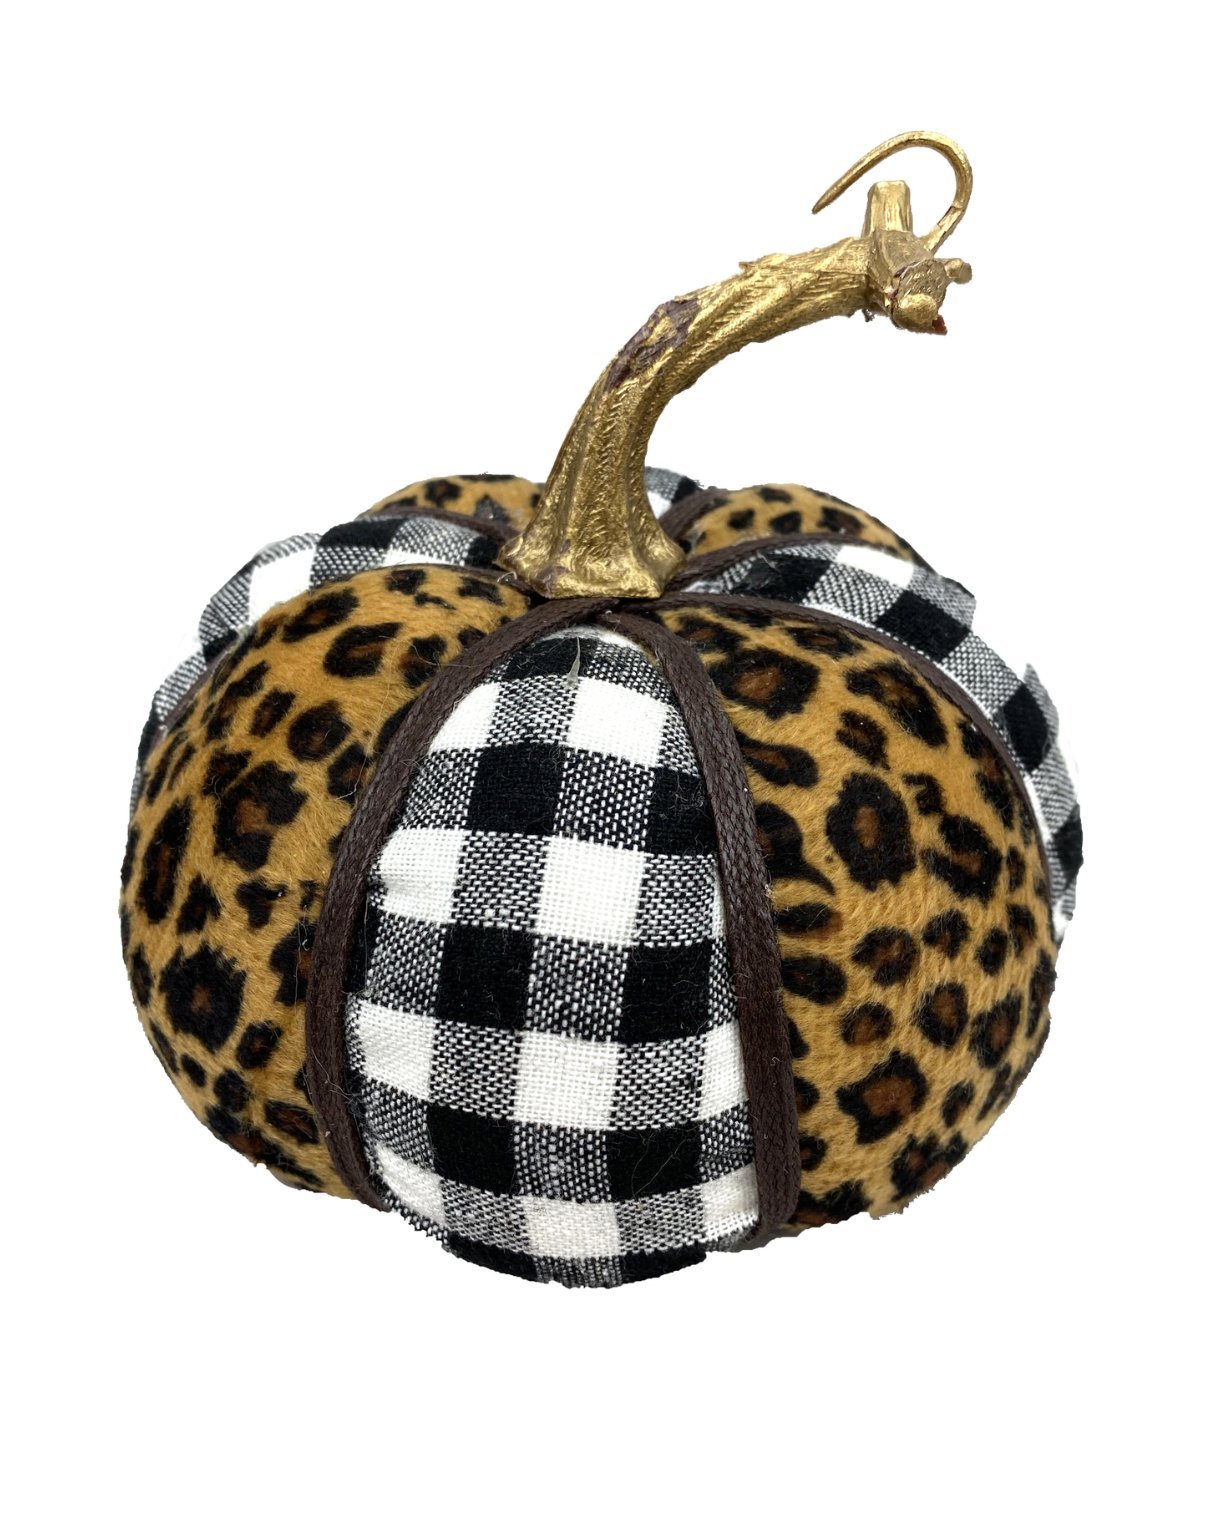 Plaid and cheetah fabric pumpkin - Greenery MarketPumpkins56701MIX